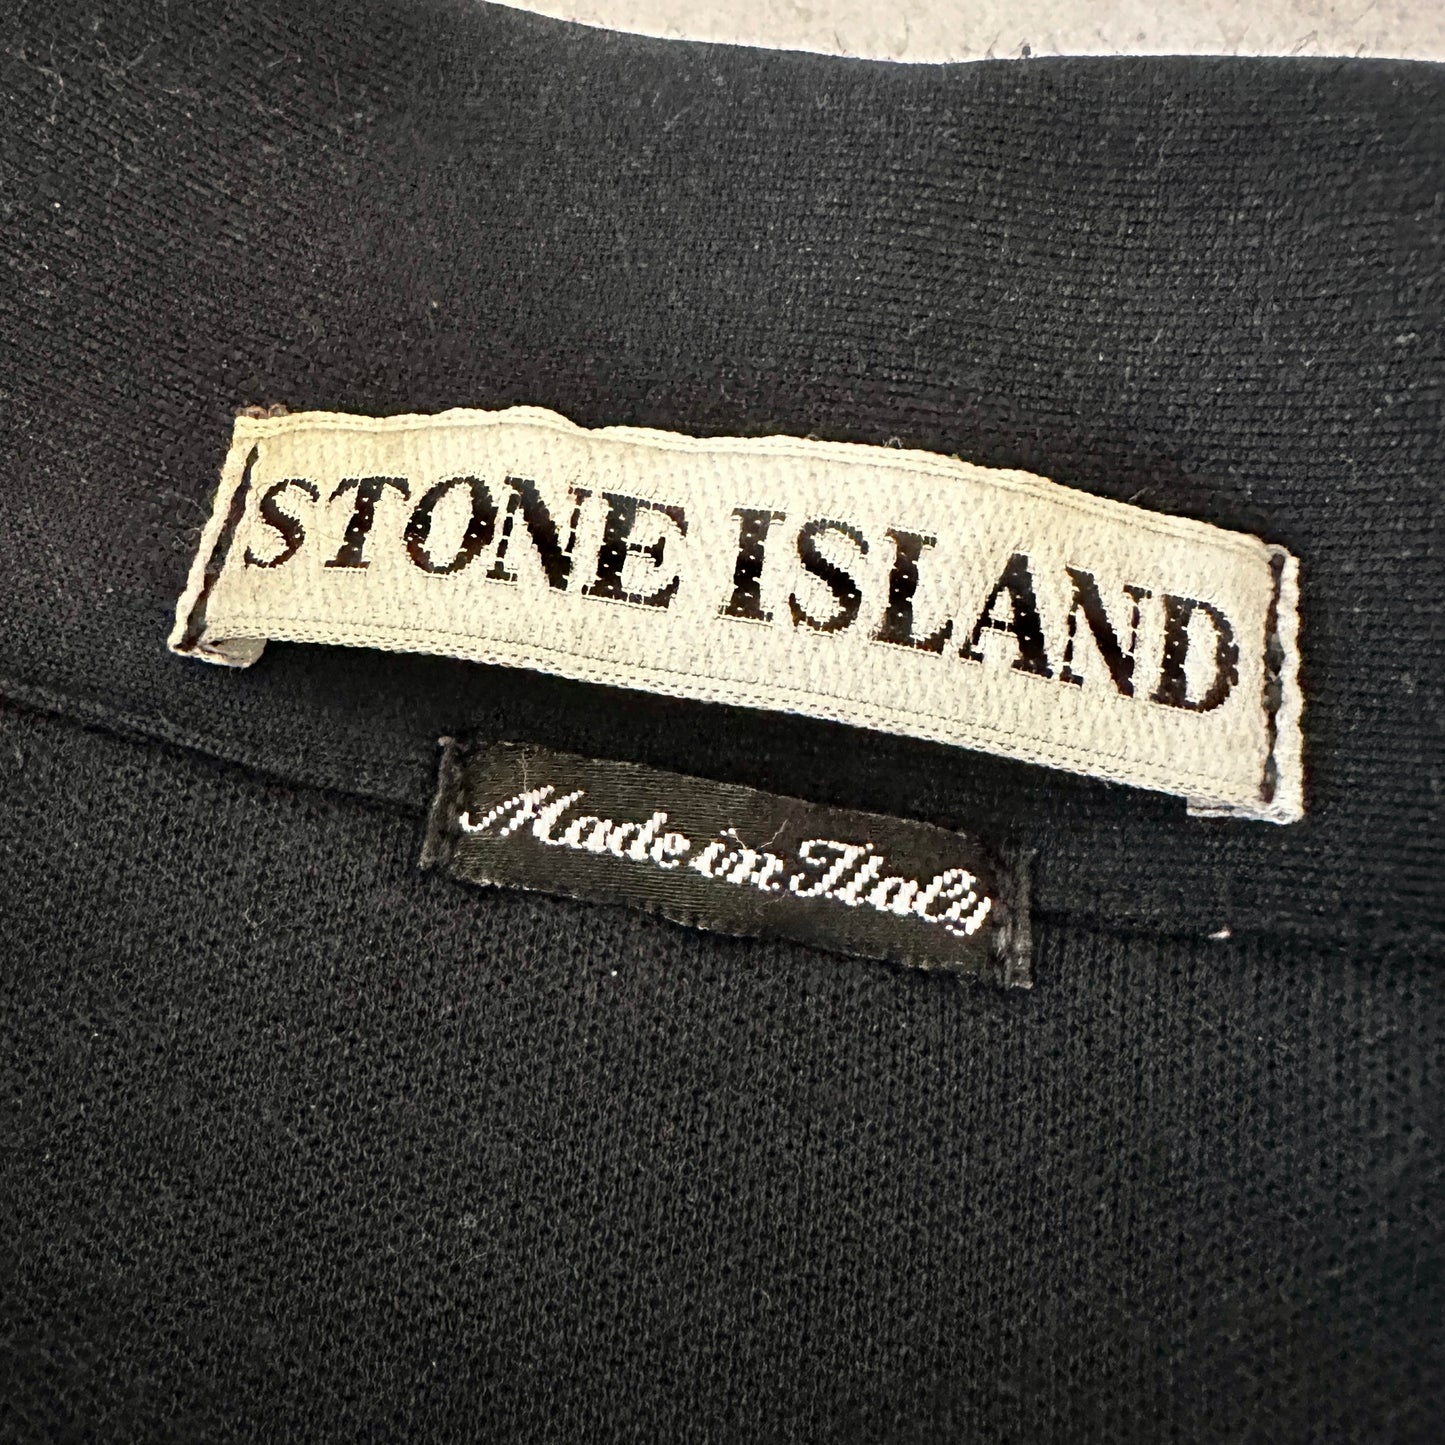 Stone Island 1997 Vintage Zip Overshirt Jacket - XXL - Made in Italy